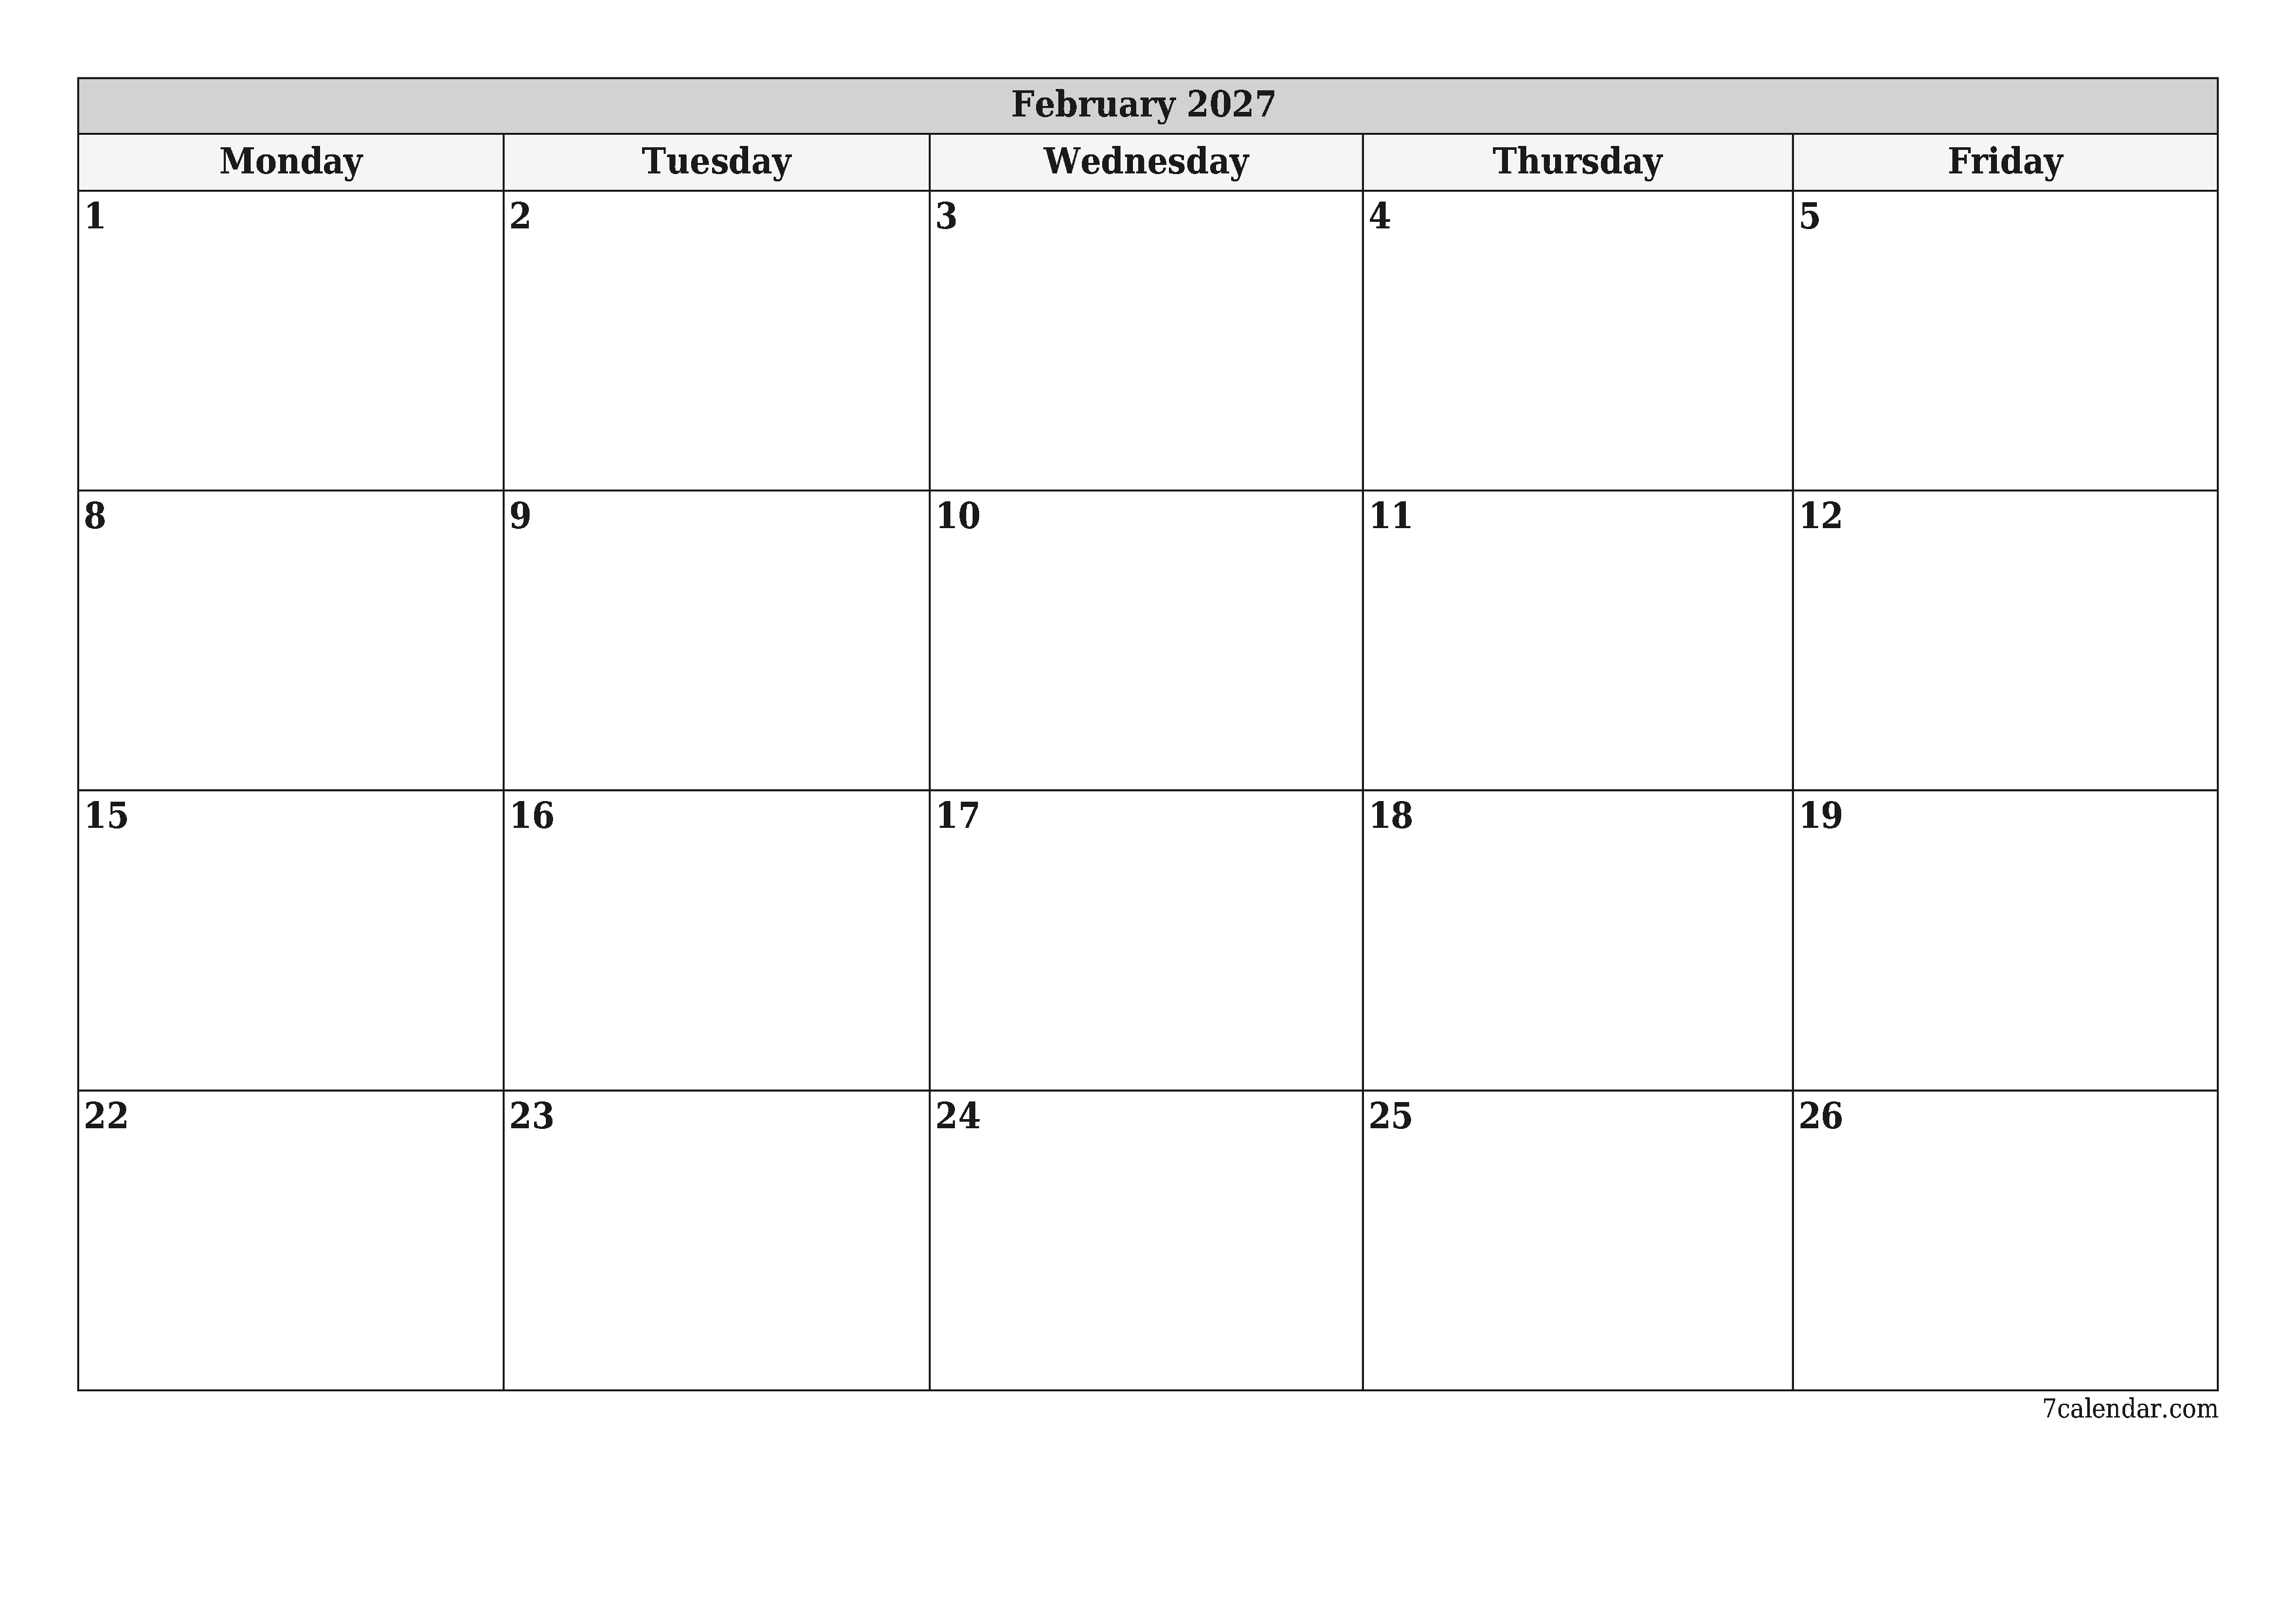 Blank calendar February 2027